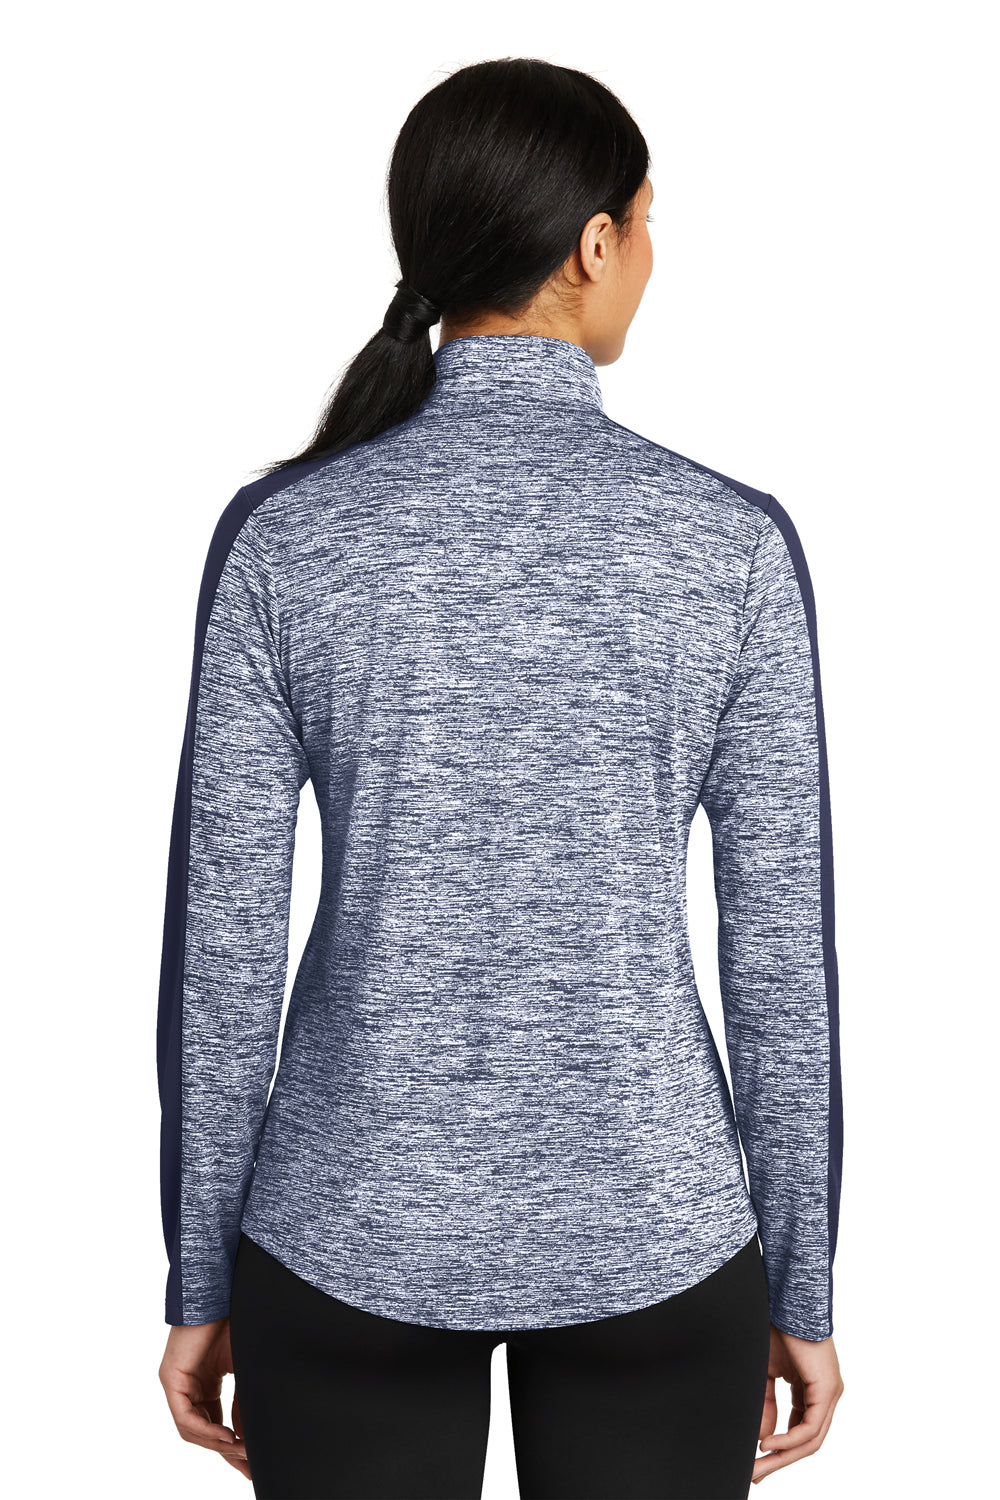 Sport-Tek LST397 Womens Electric Heather Moisture Wicking 1/4 Zip Sweatshirt Navy Blue Back